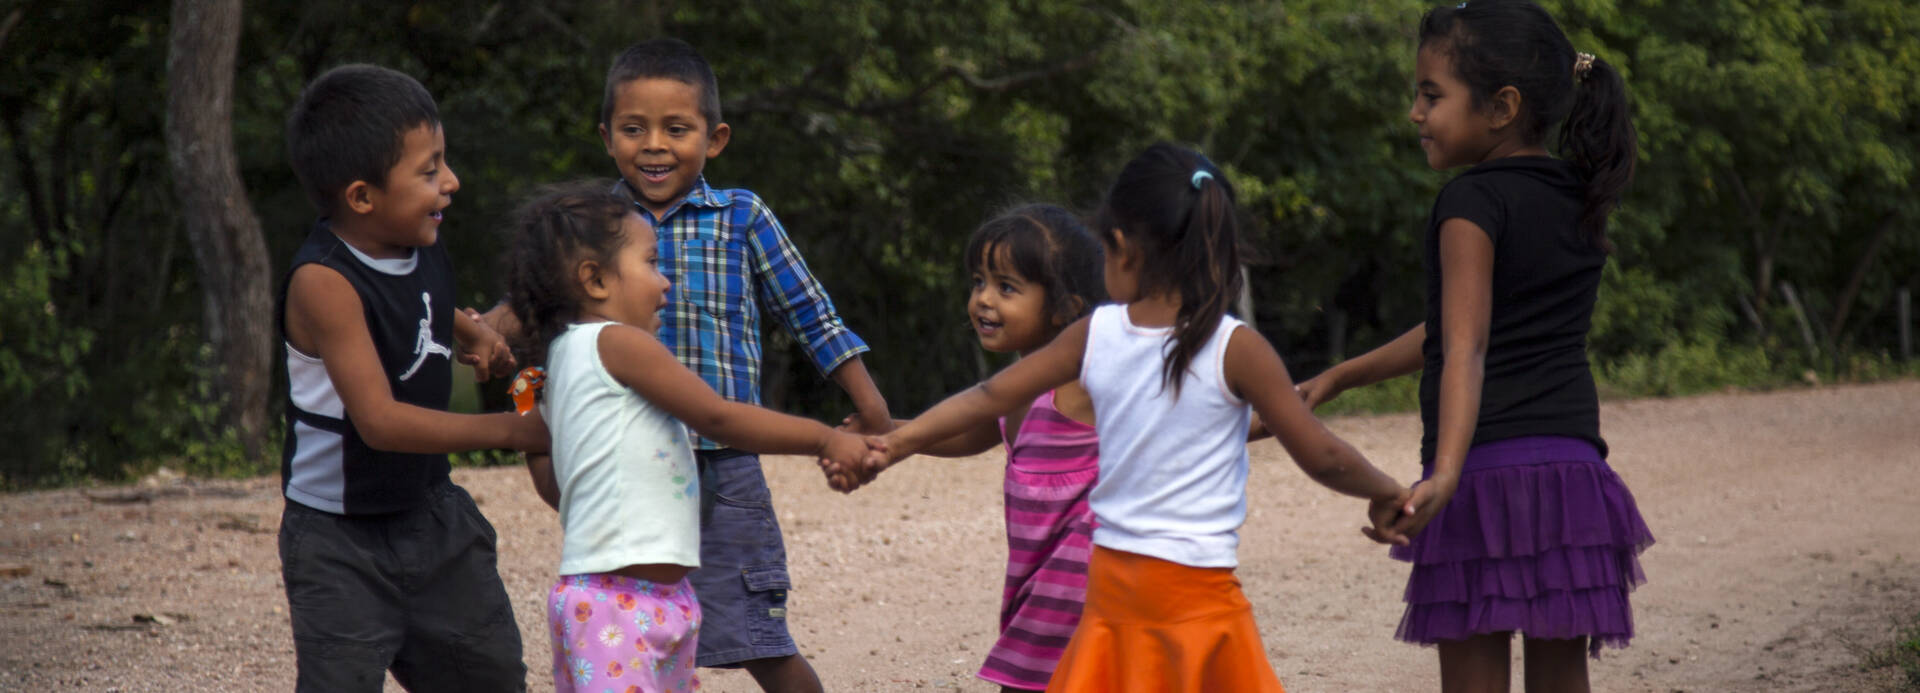 Kinder in Nicaragua tanzen im Kreis.